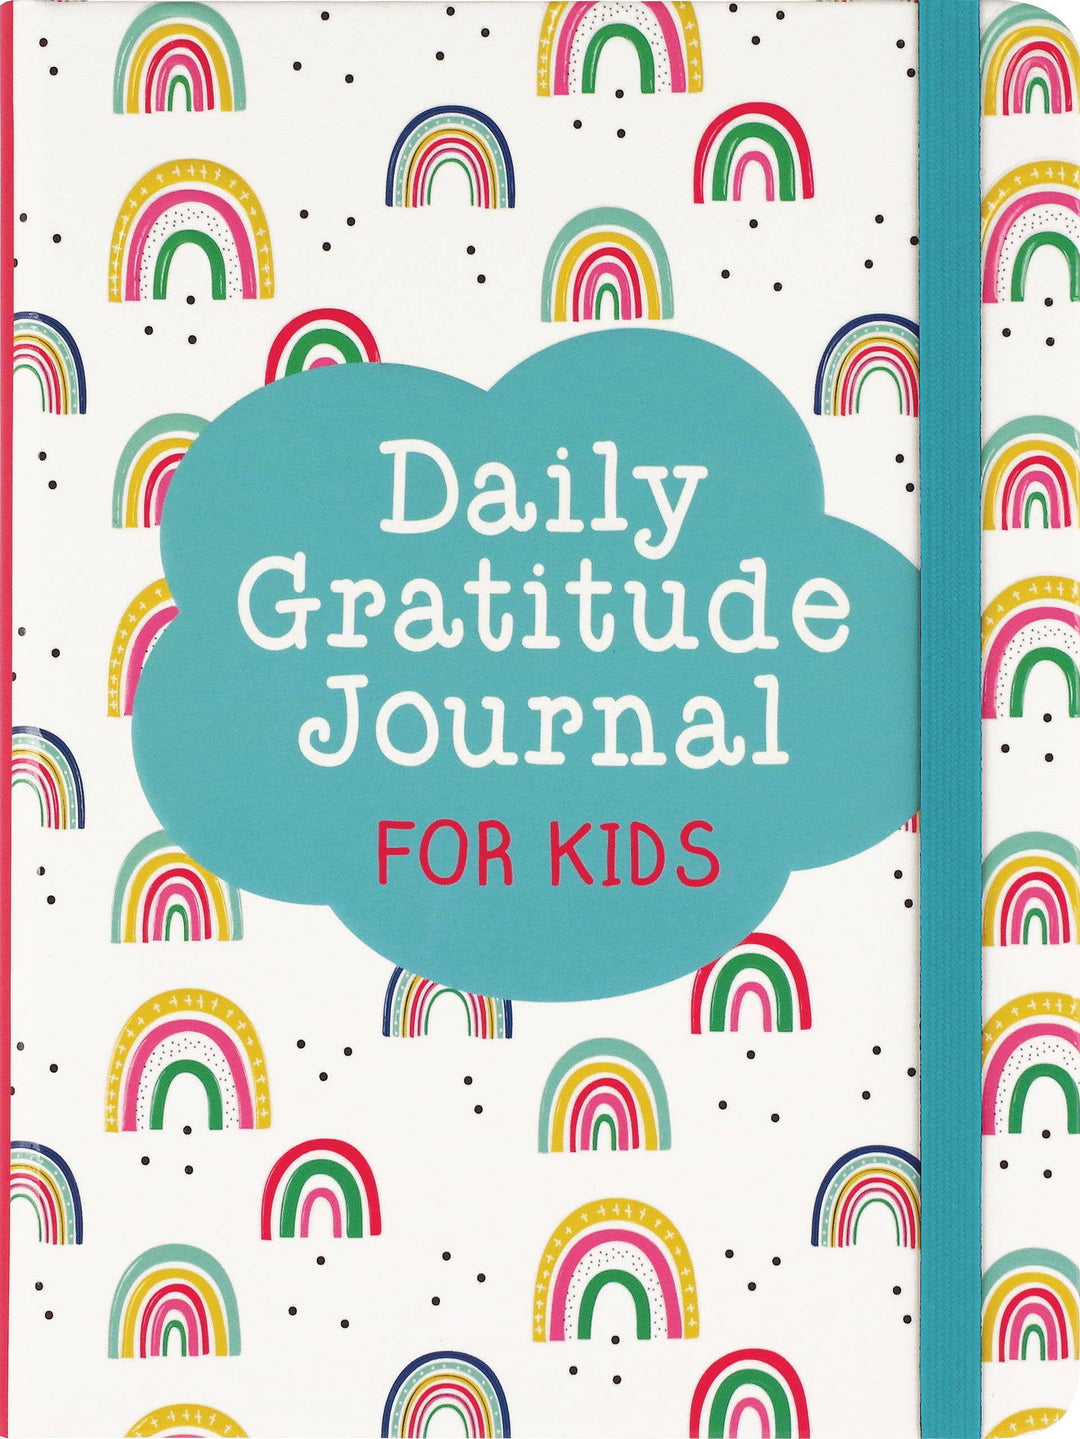 Peter Pauper Press - Daily Gratitude Journal for Kids